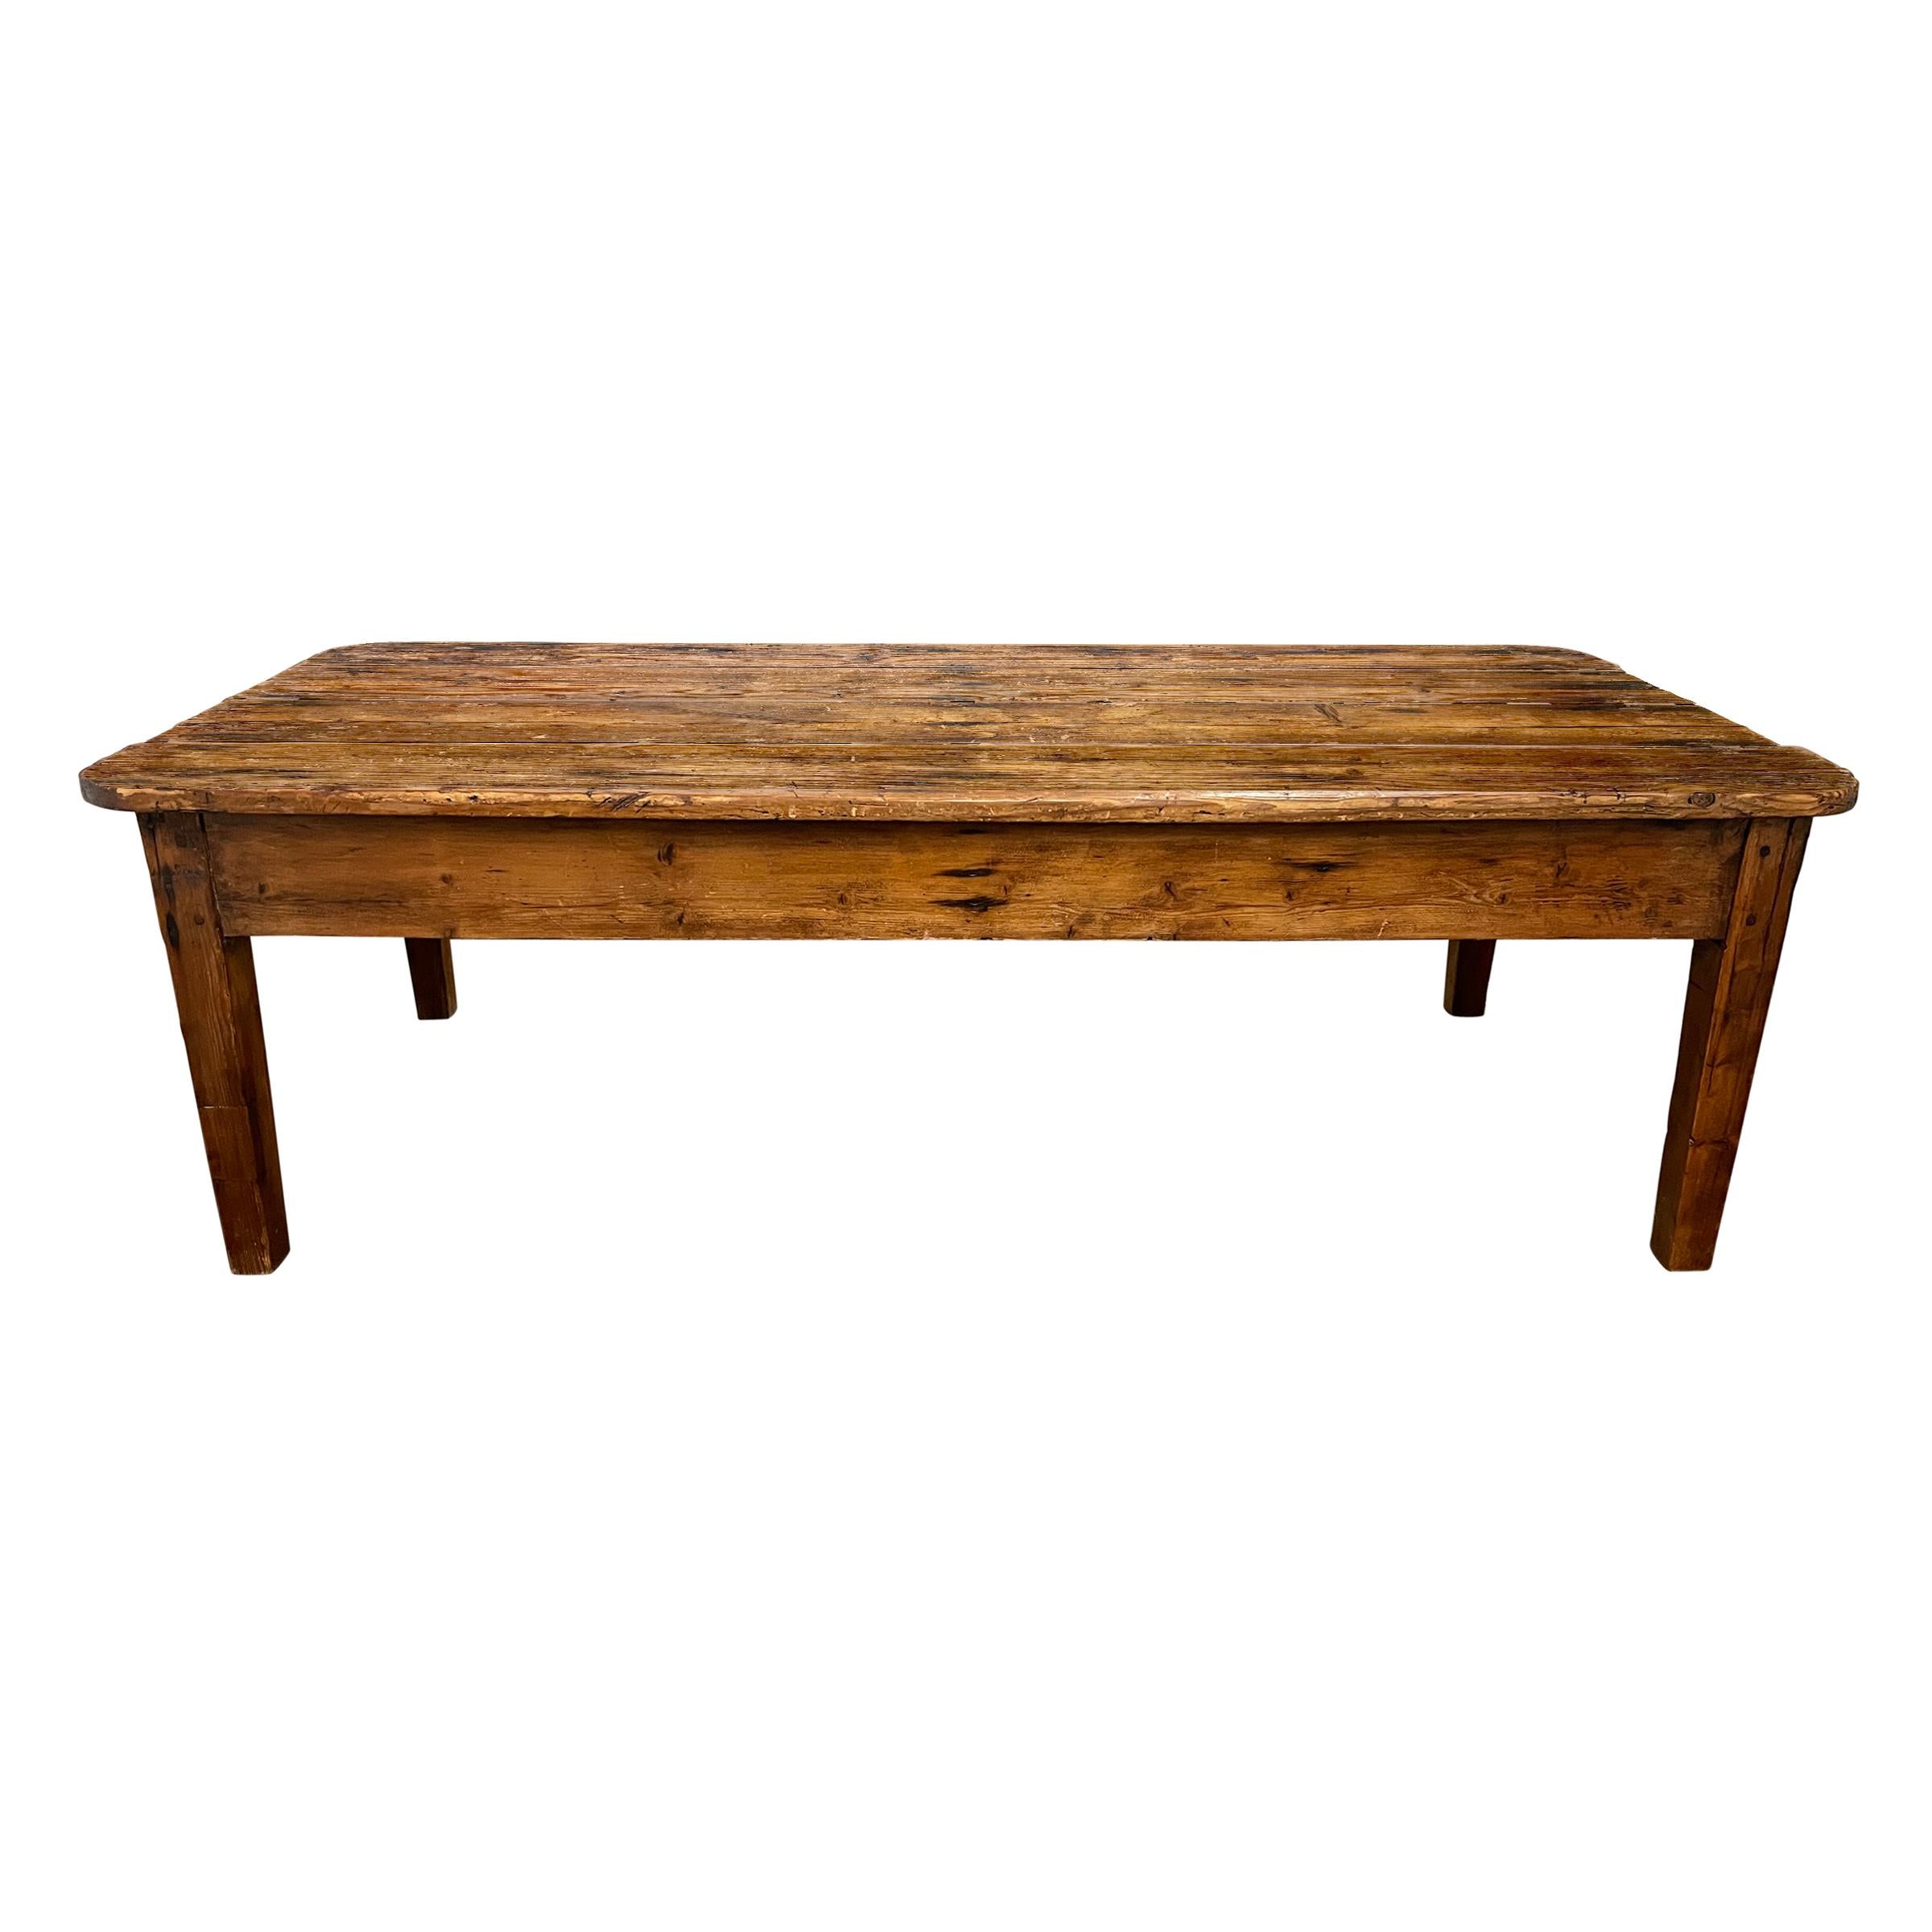 19th Century English Pine Low Table